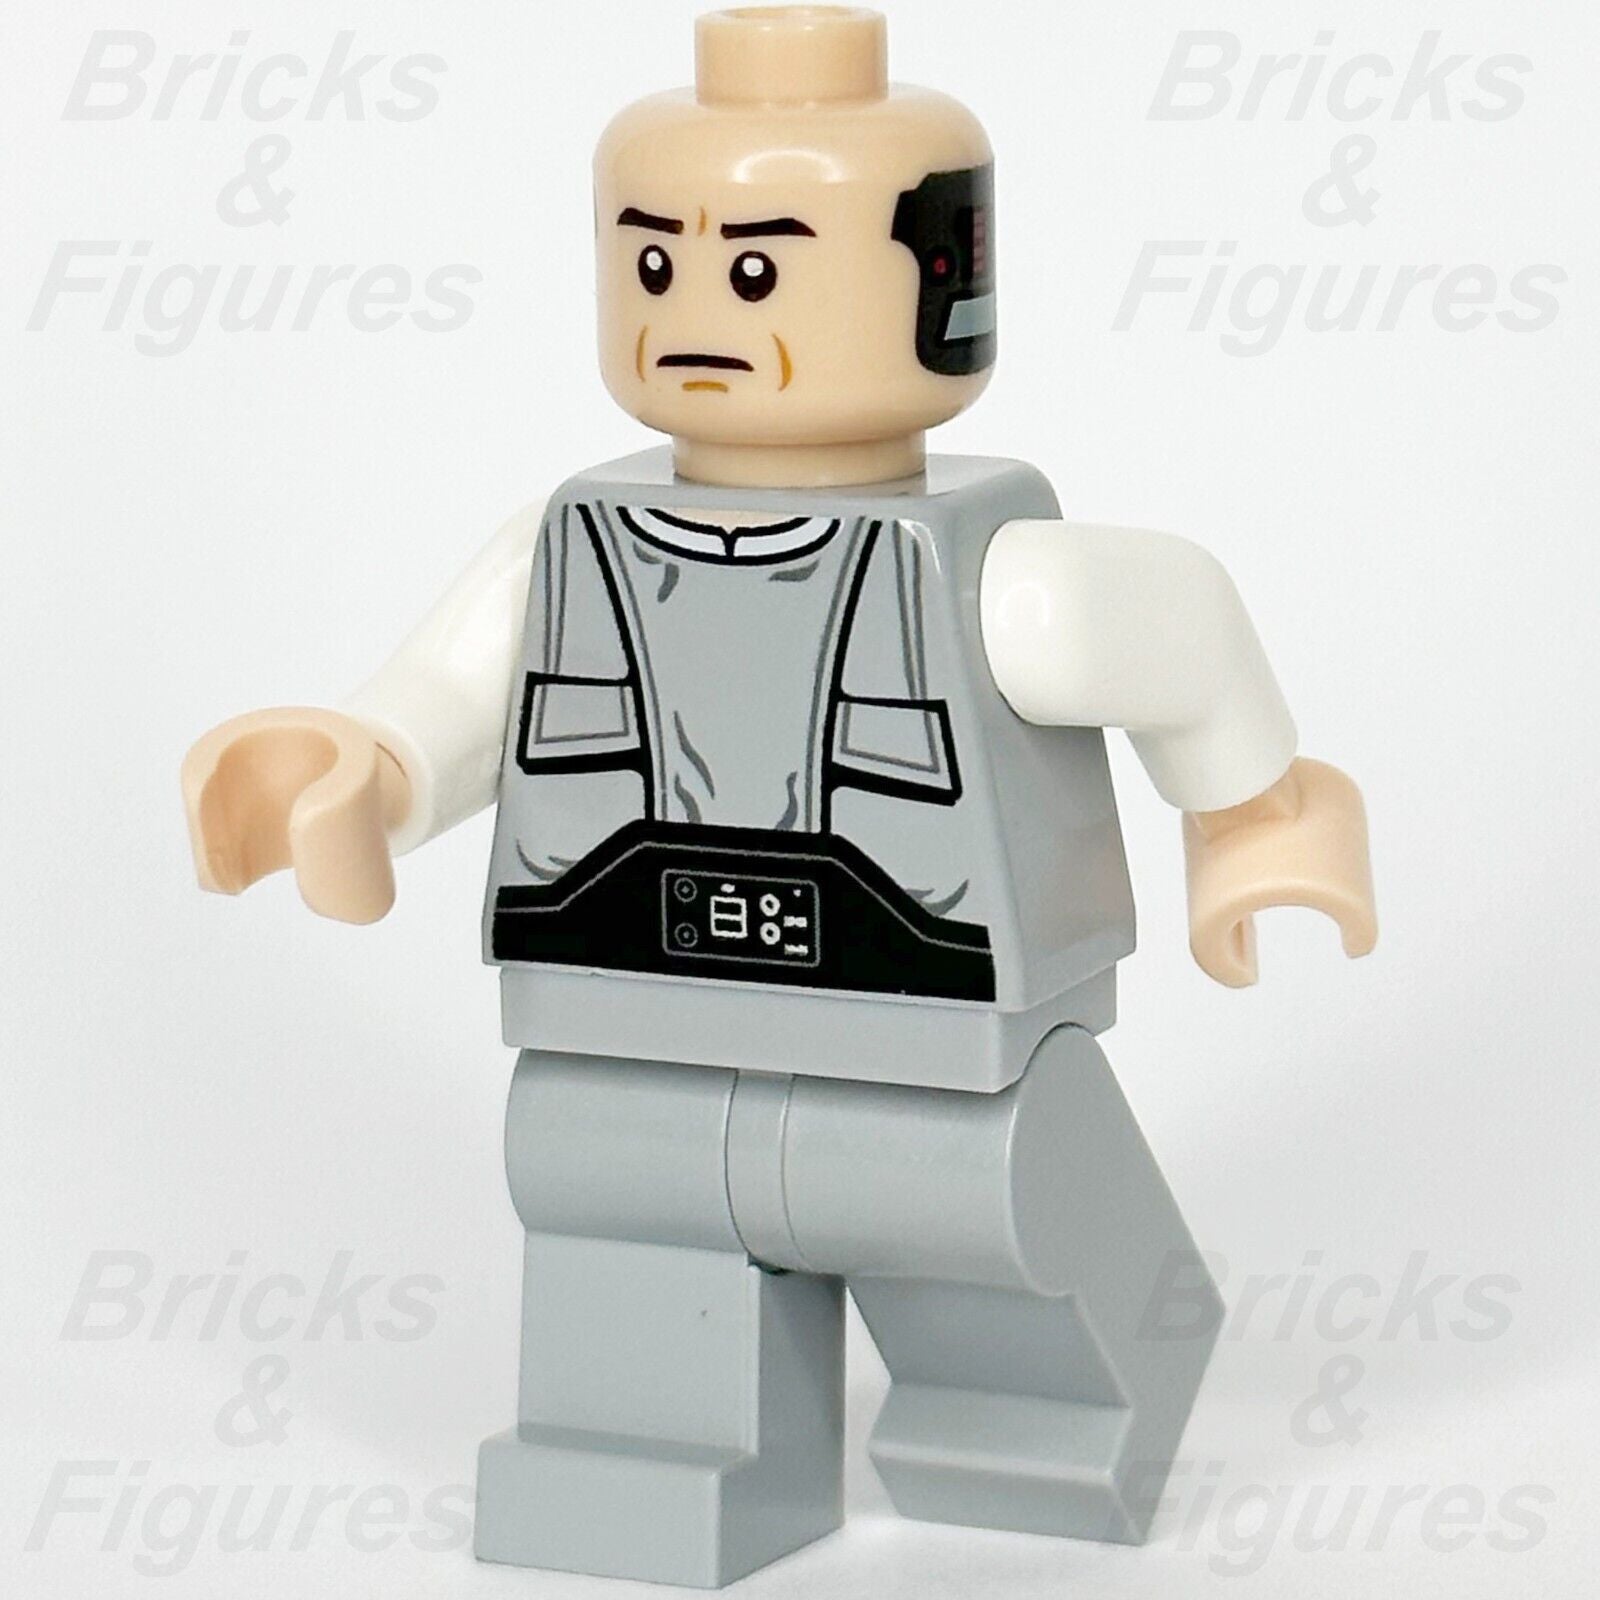 LEGO Star Wars Lobot Minifigure The Empire Strikes Back 9678 sw0400 Minifig 1